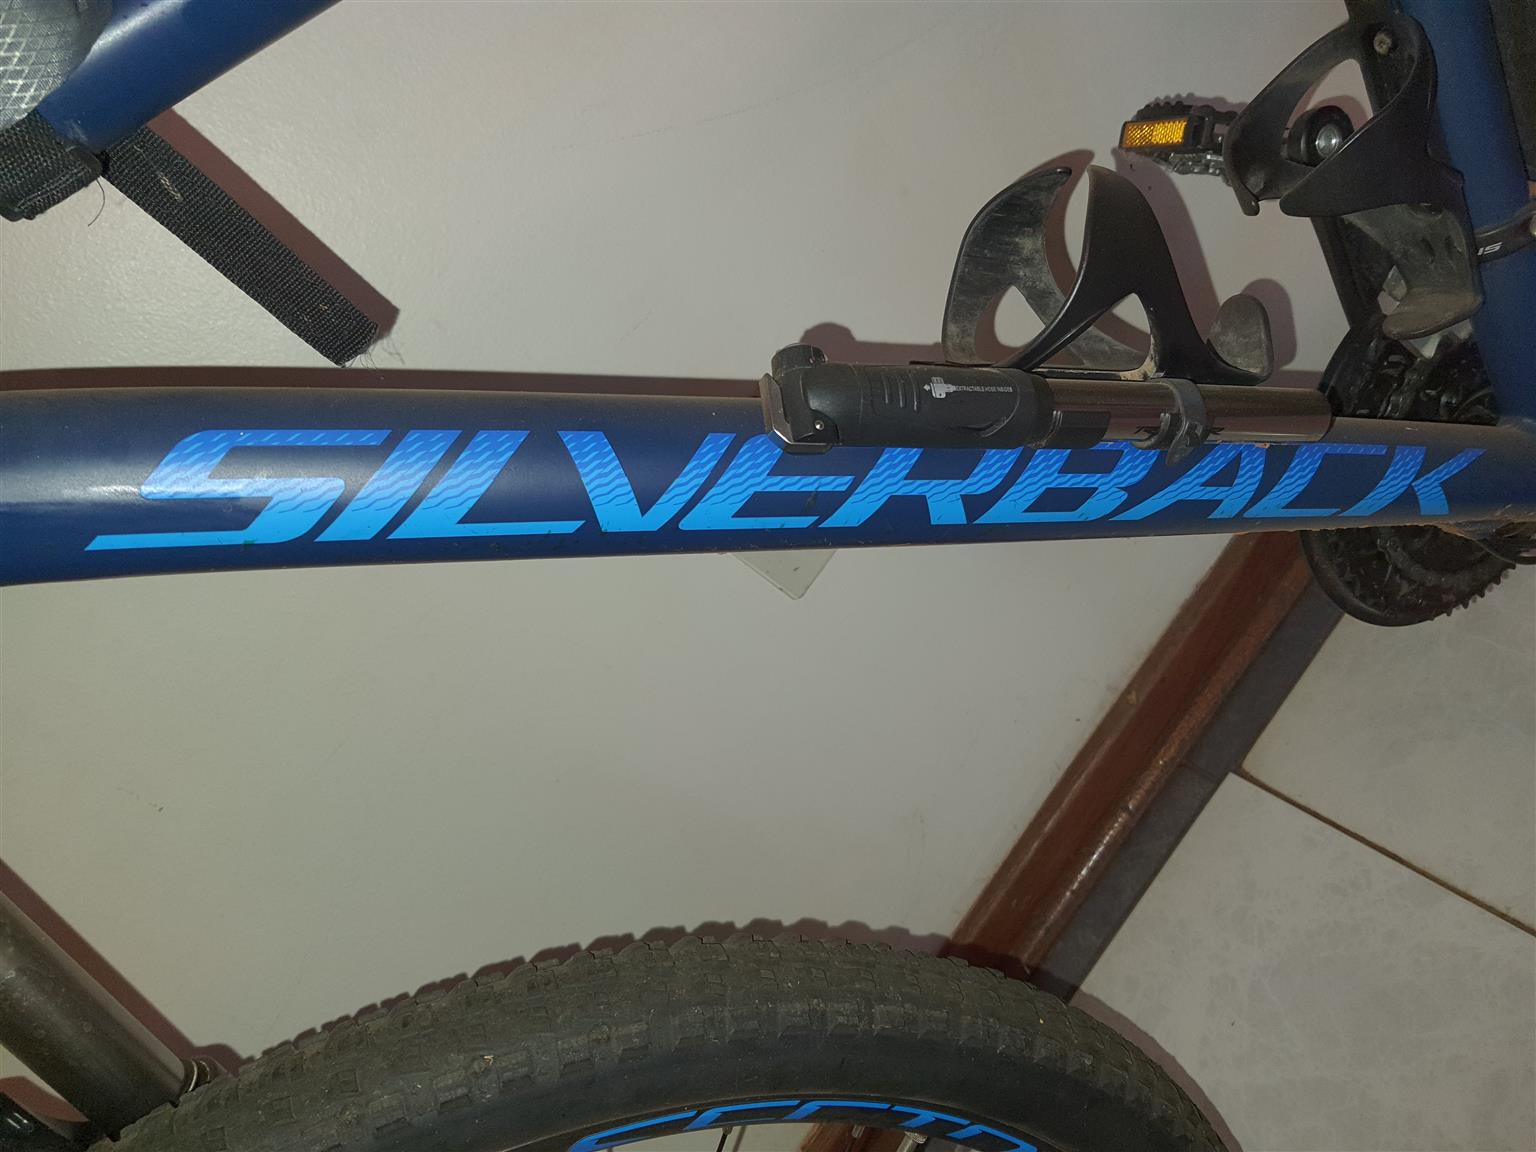 Silverback bike for sale